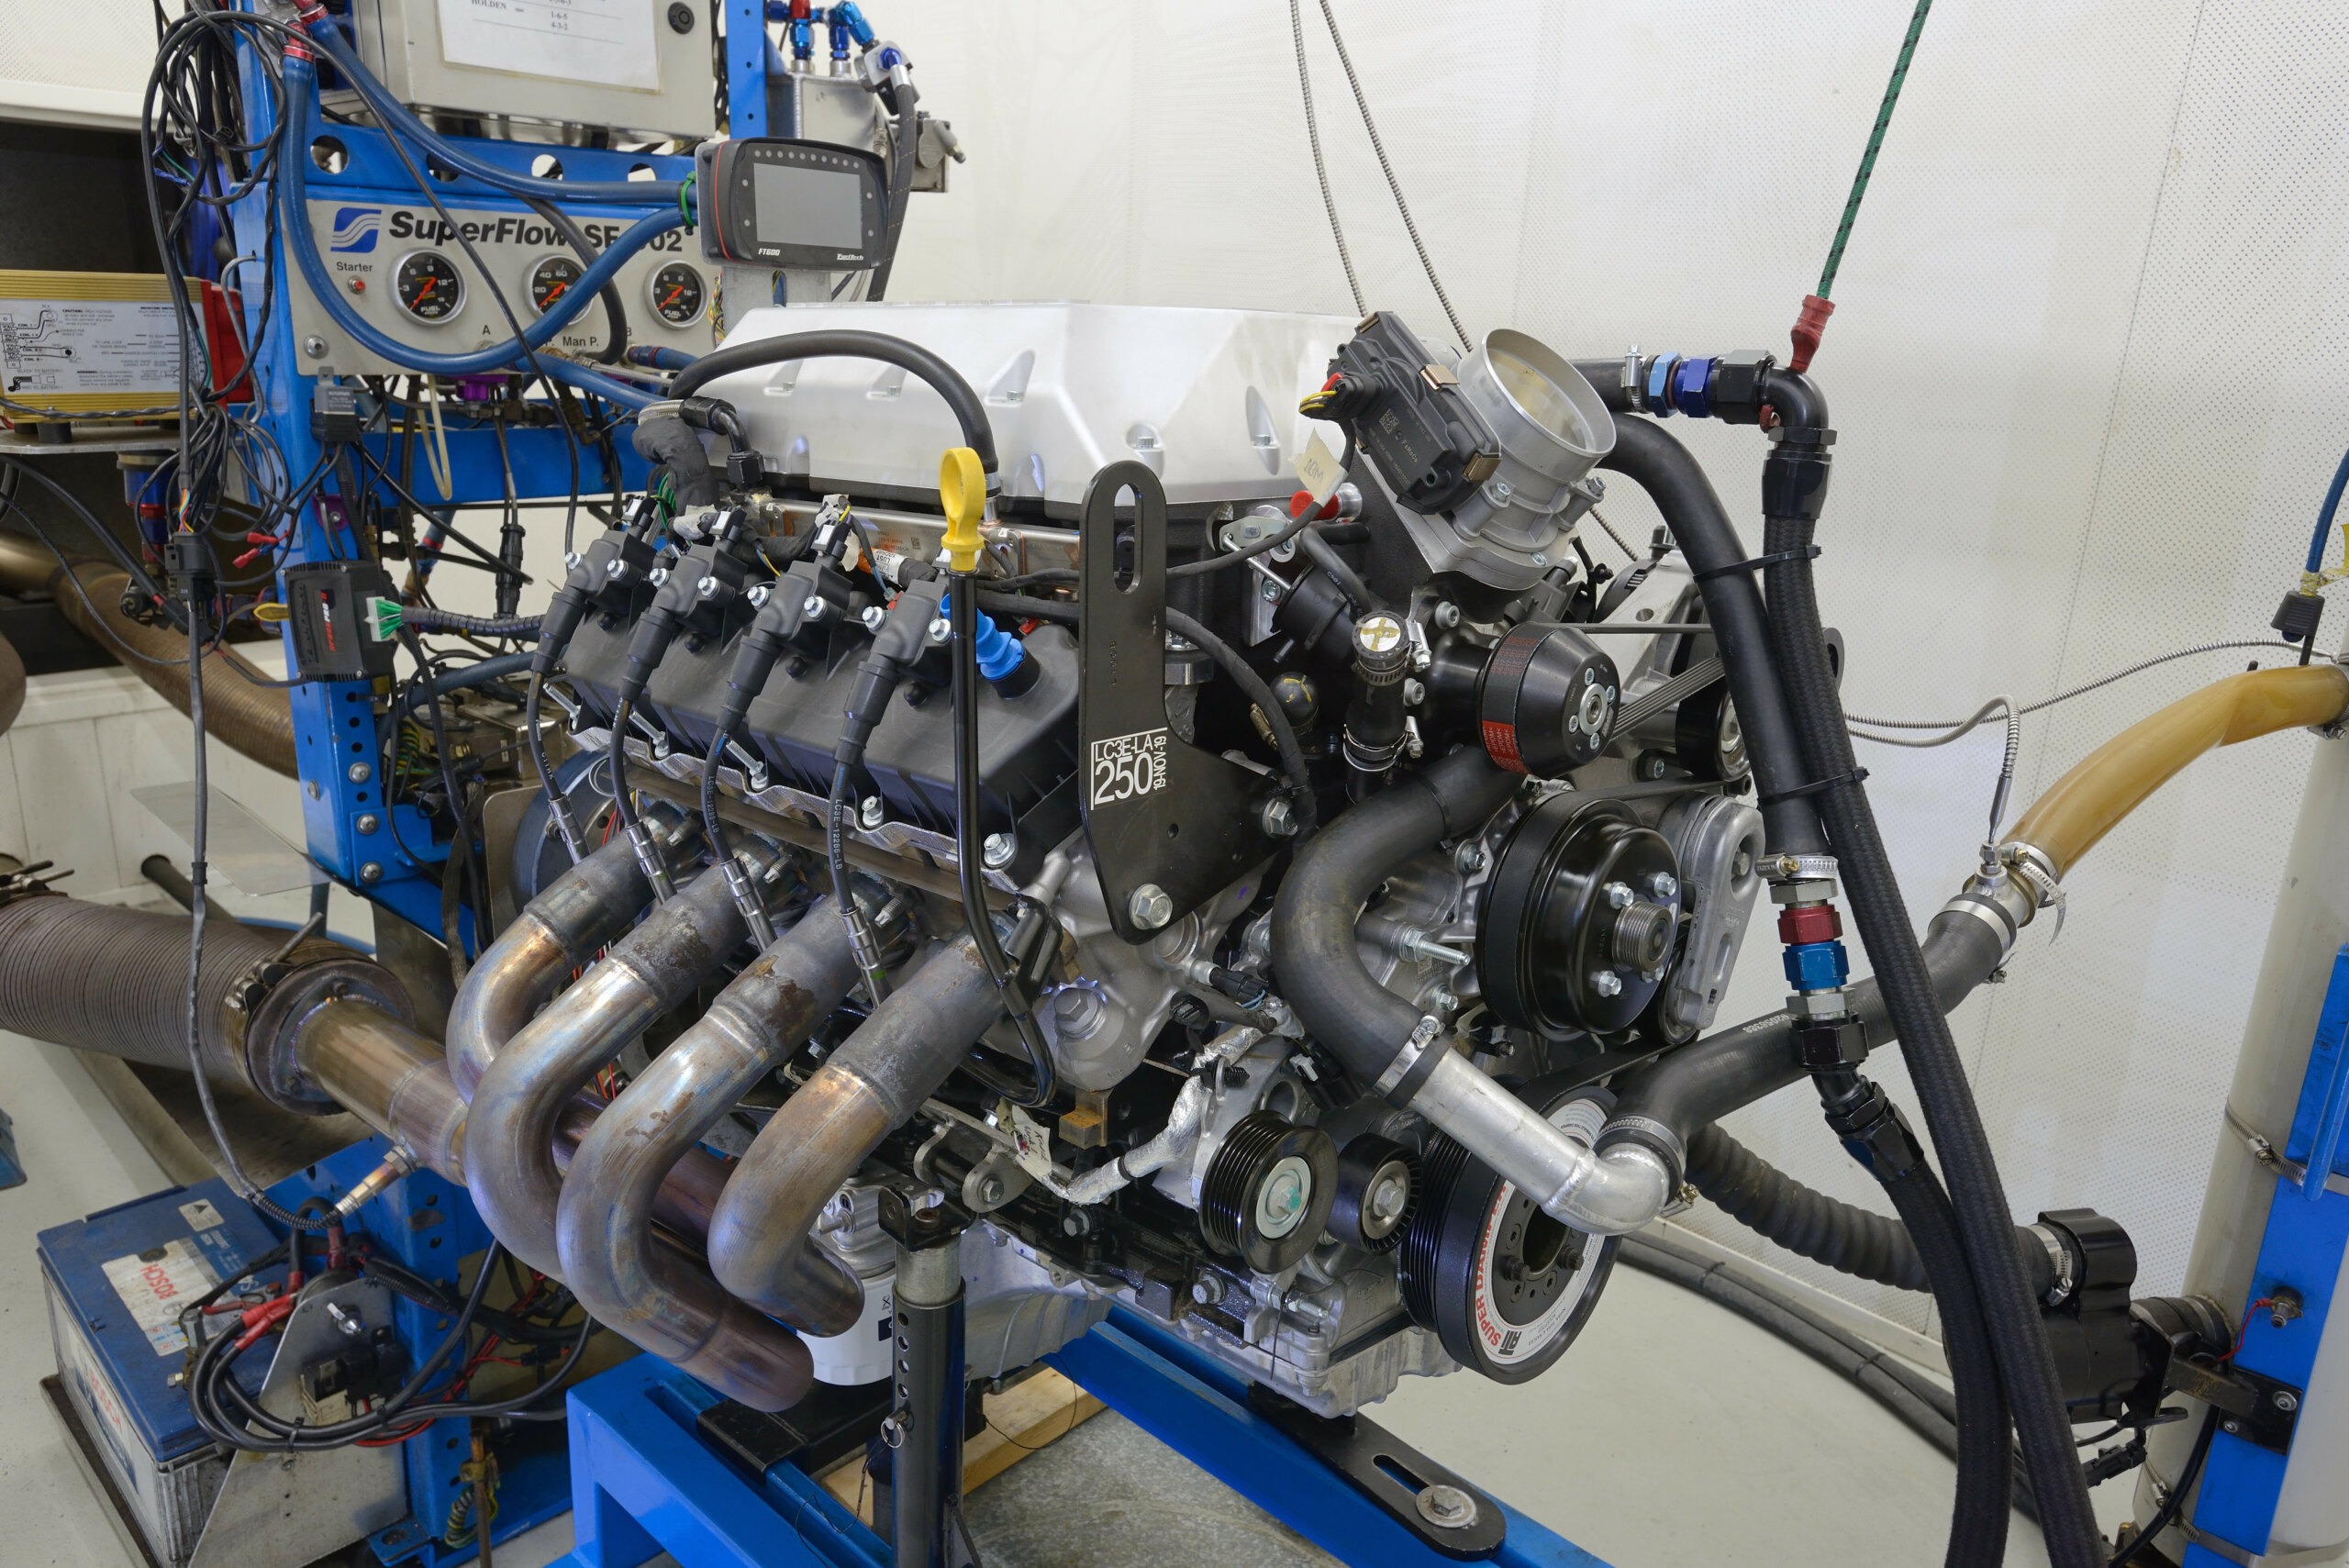 Stock Ford Godzilla engine makes 1000hp